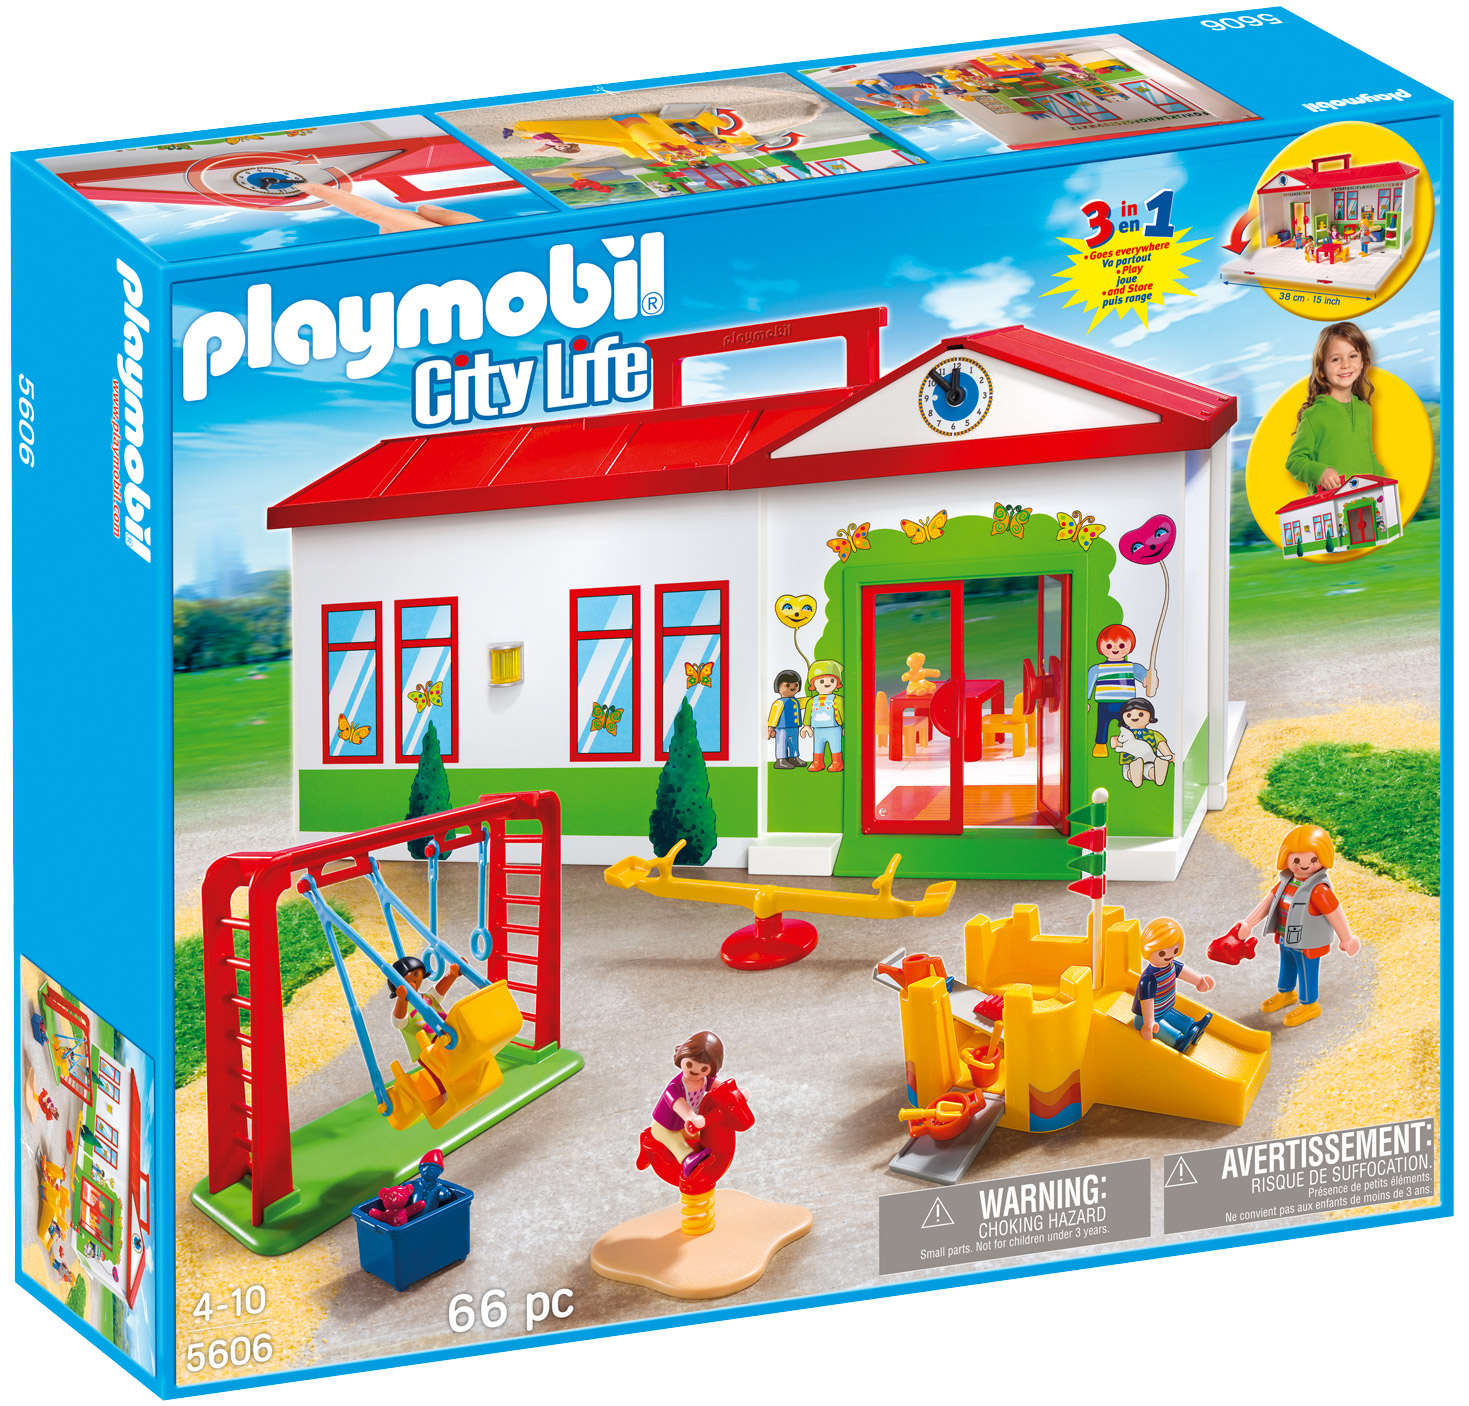 Playmobil City Life 5606 pas cher, La garderie